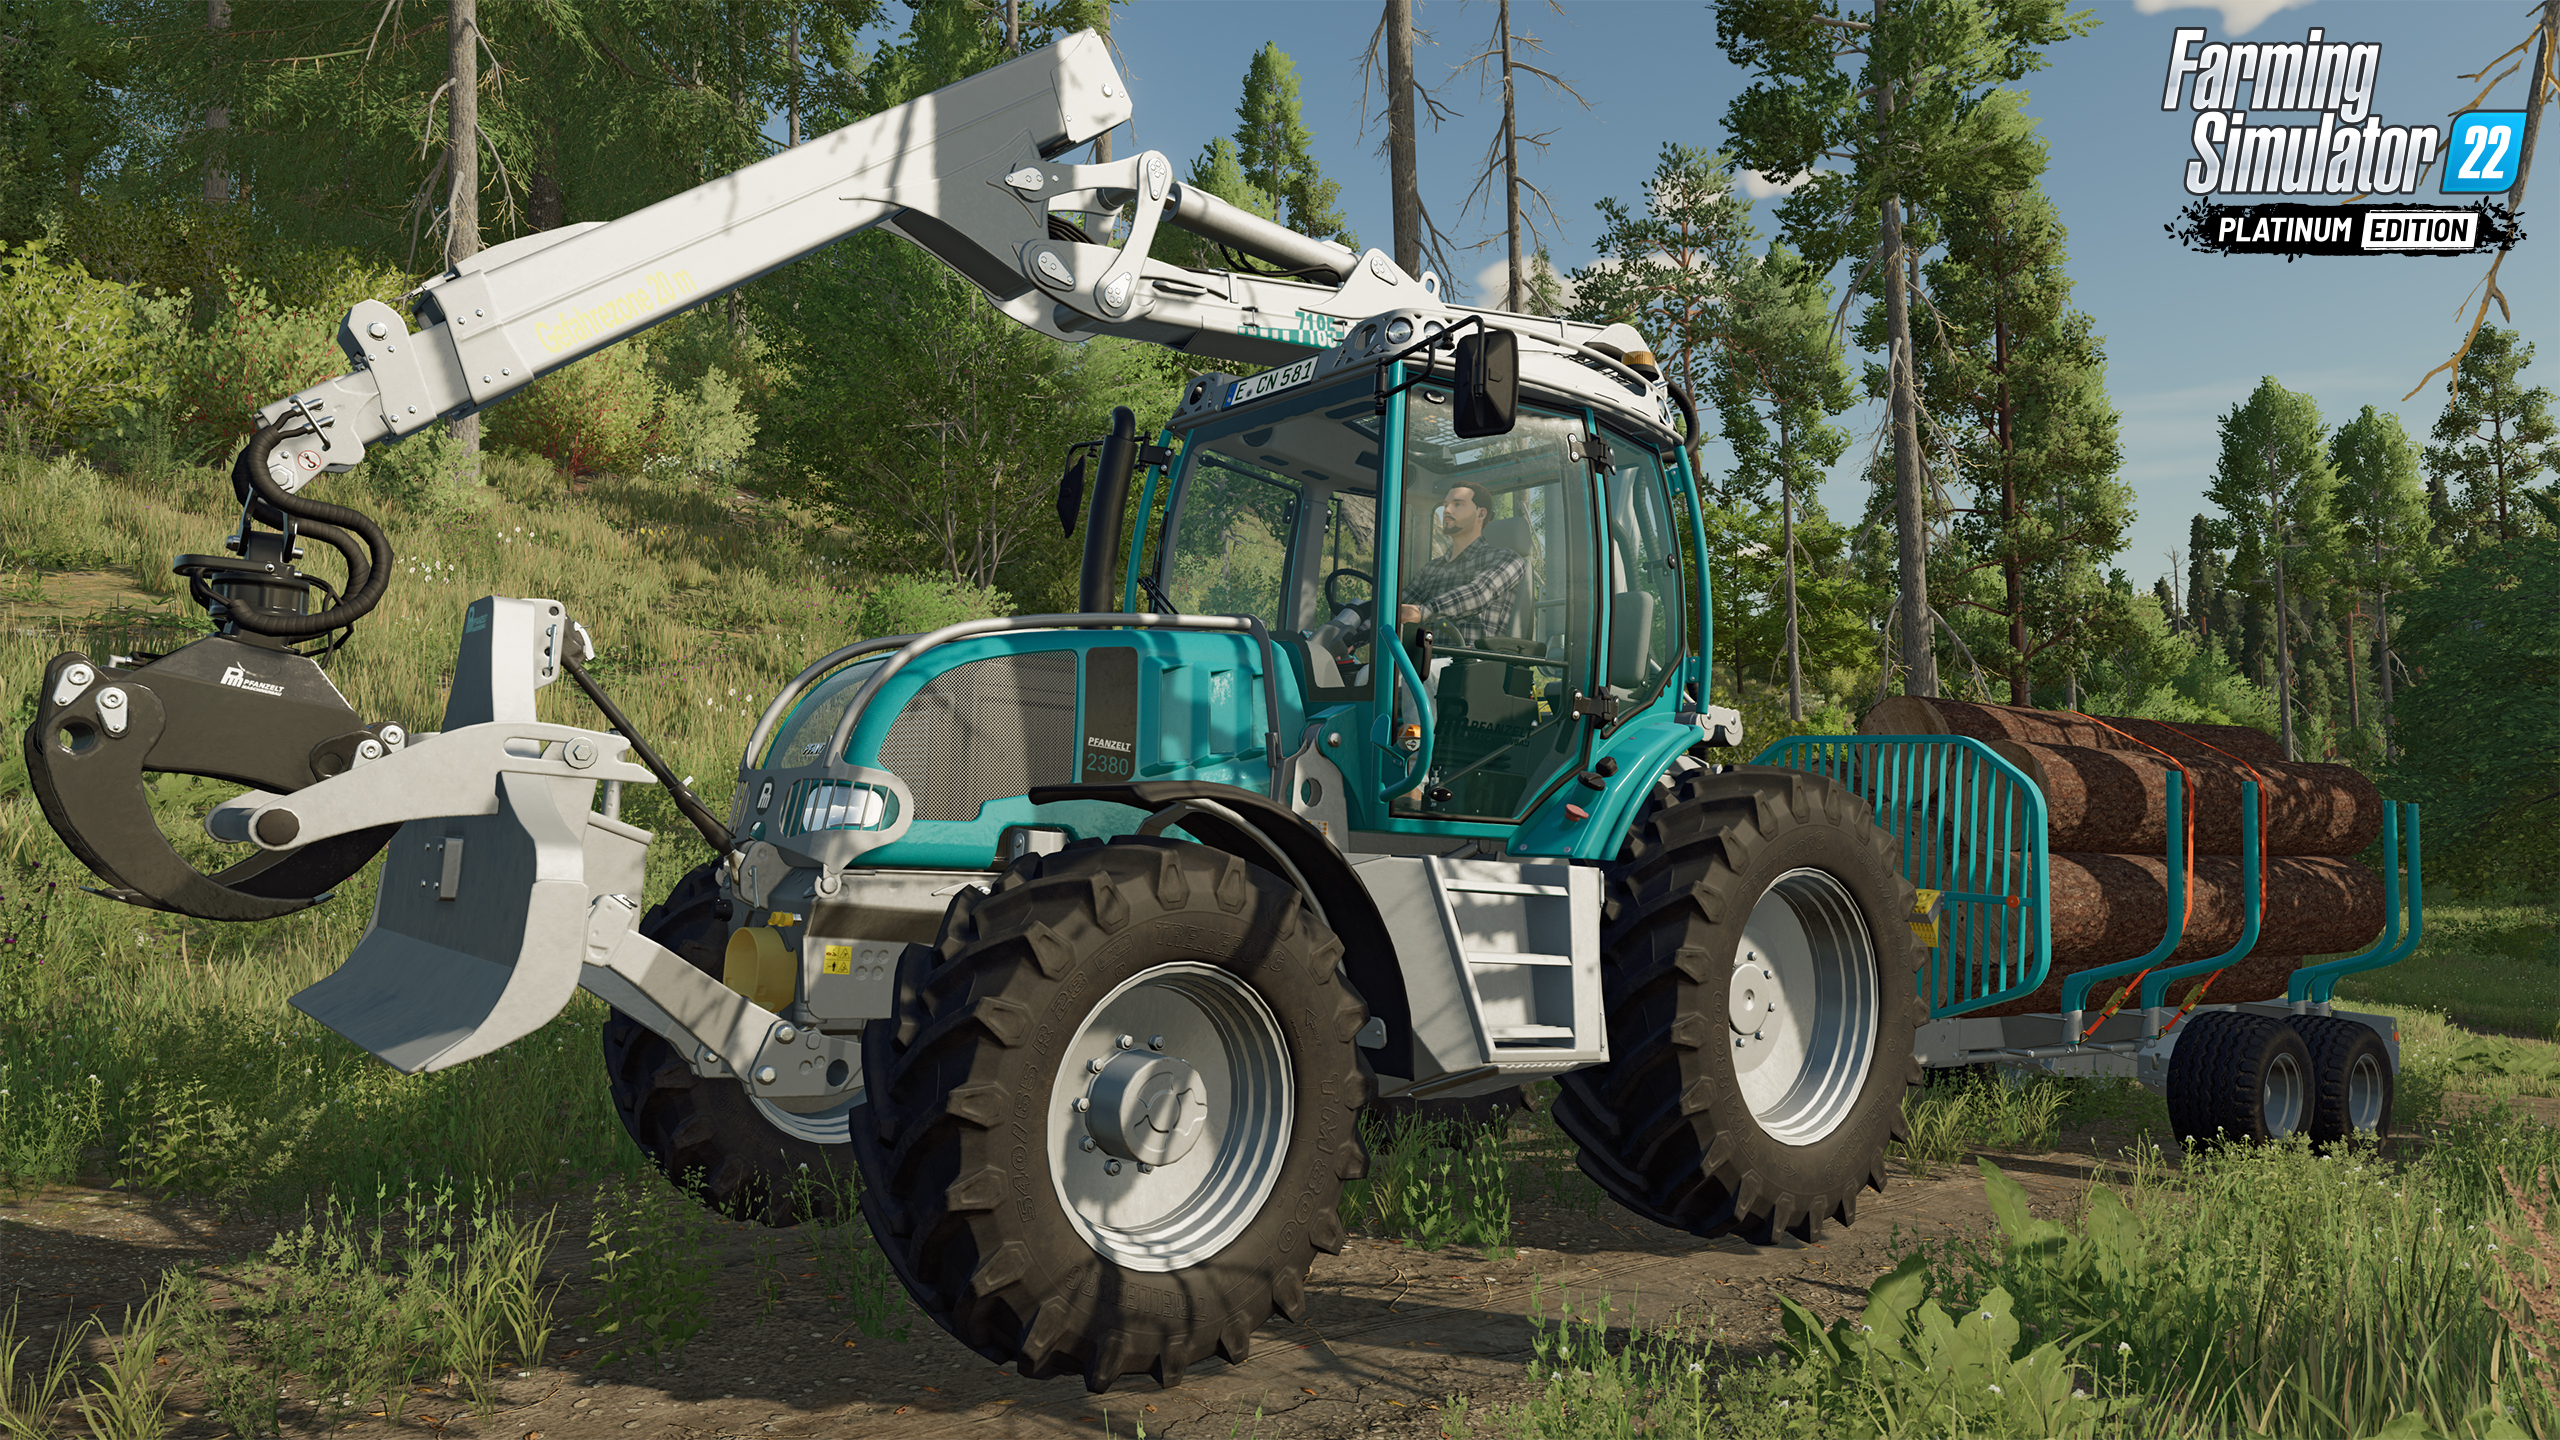 Farming Simulator, released version 22